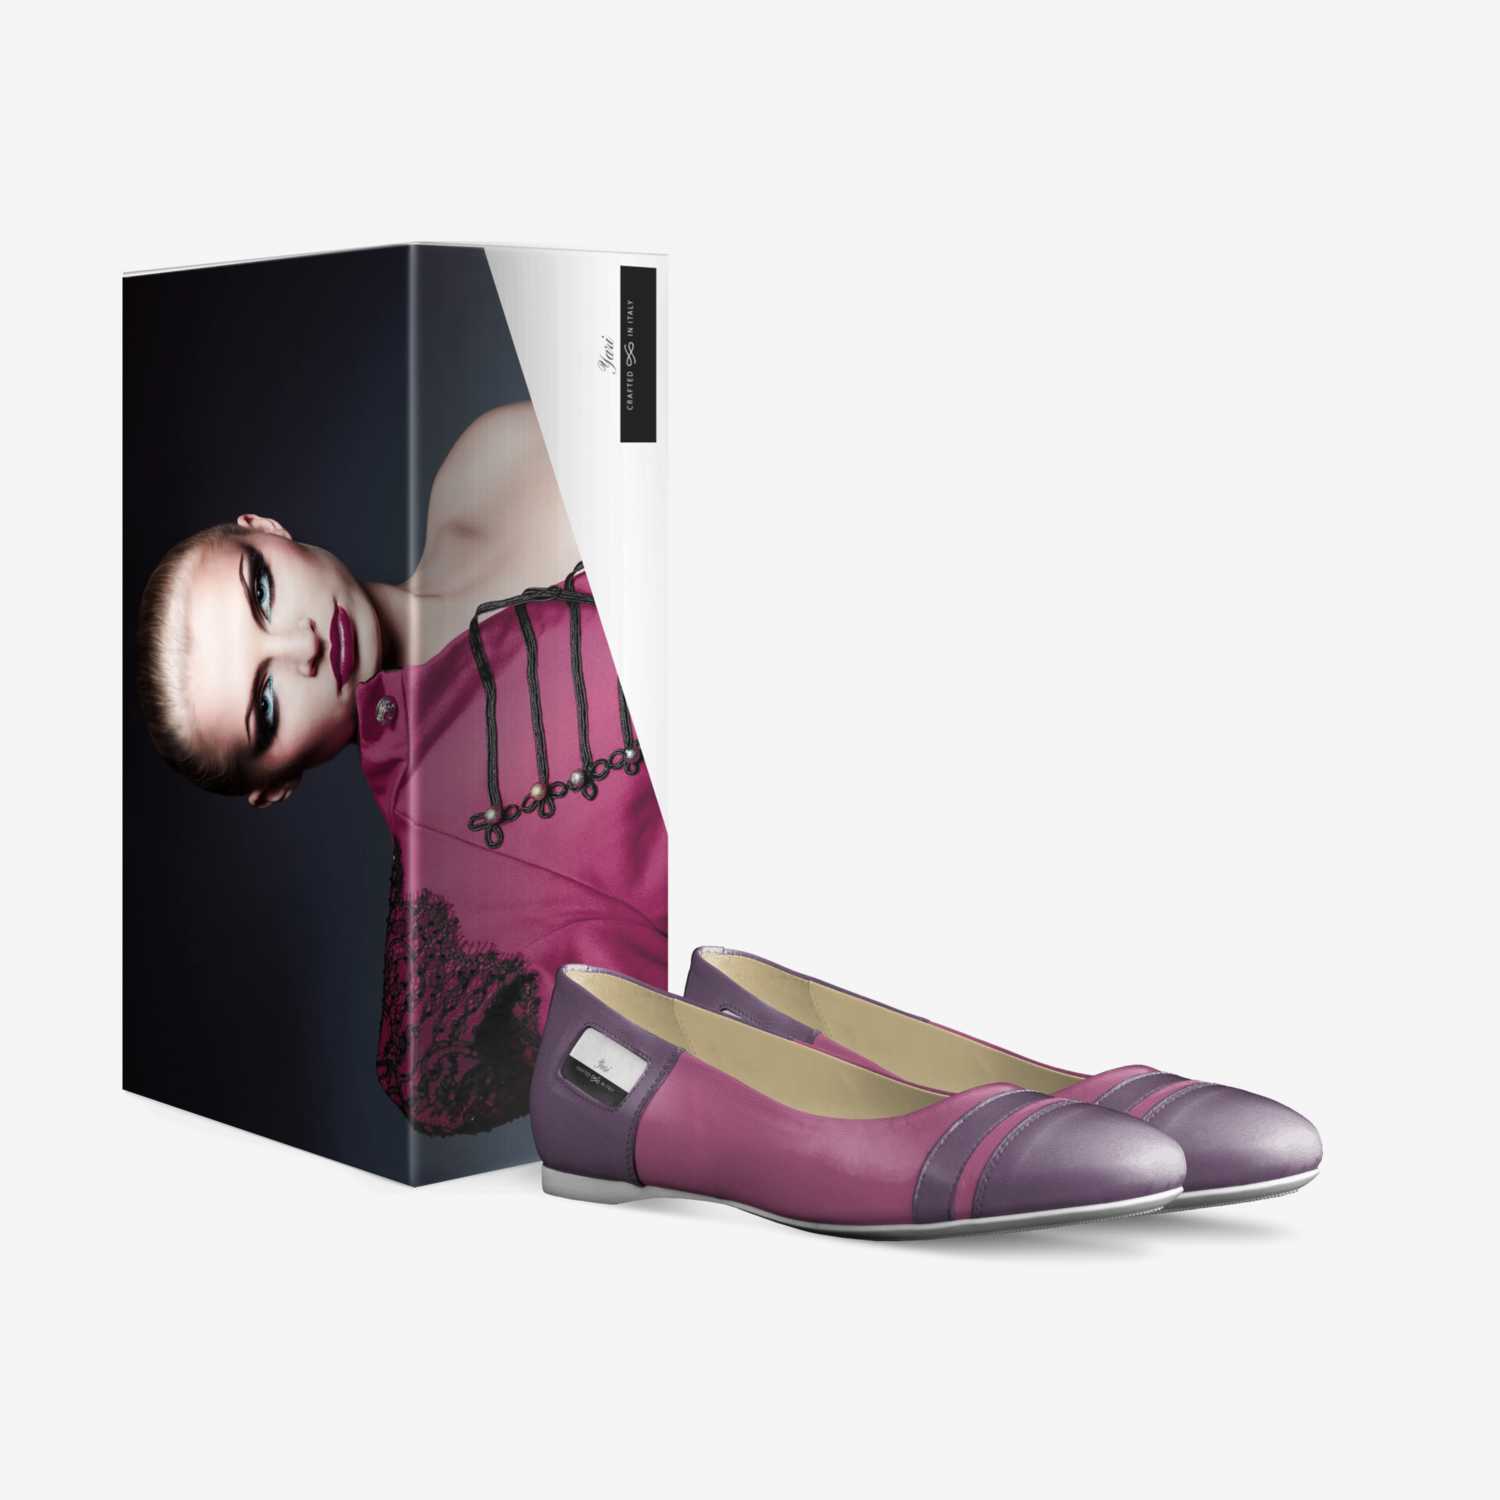 R.ASENCIO custom made in Italy shoes by Richard Asencio | Box view